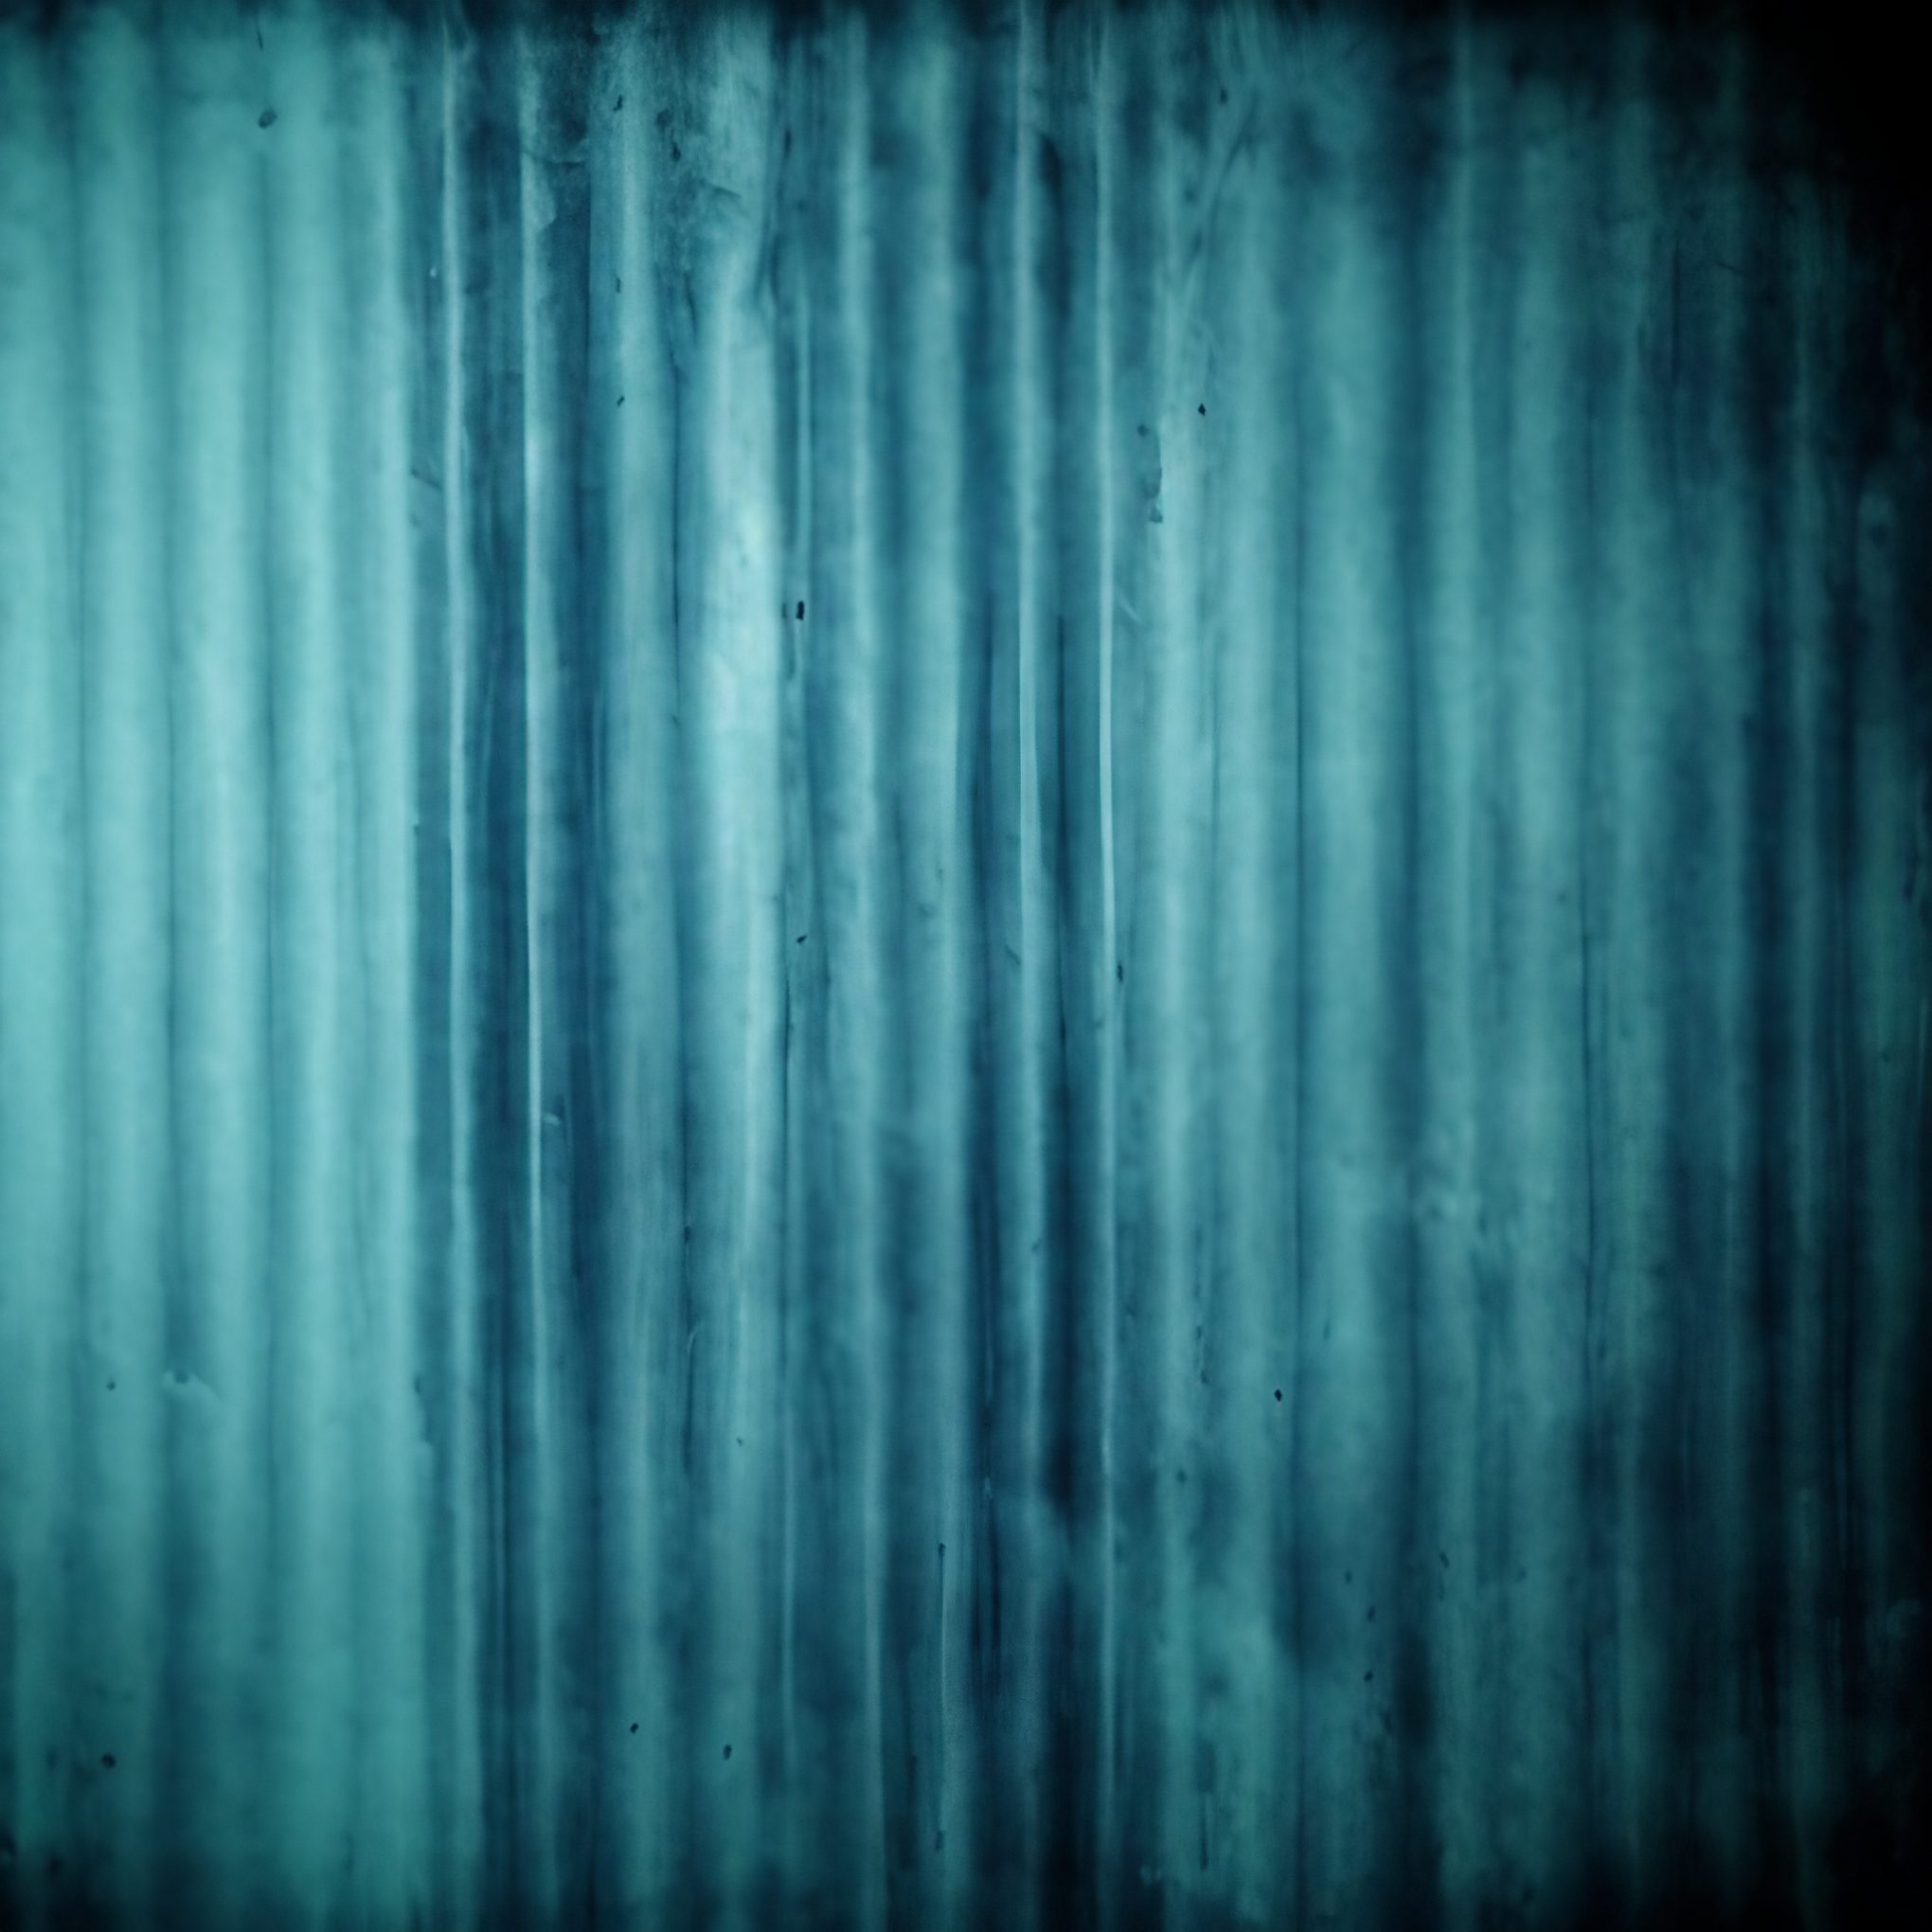 Blue Grunge corrugated Metal Texture Background Free Image Download